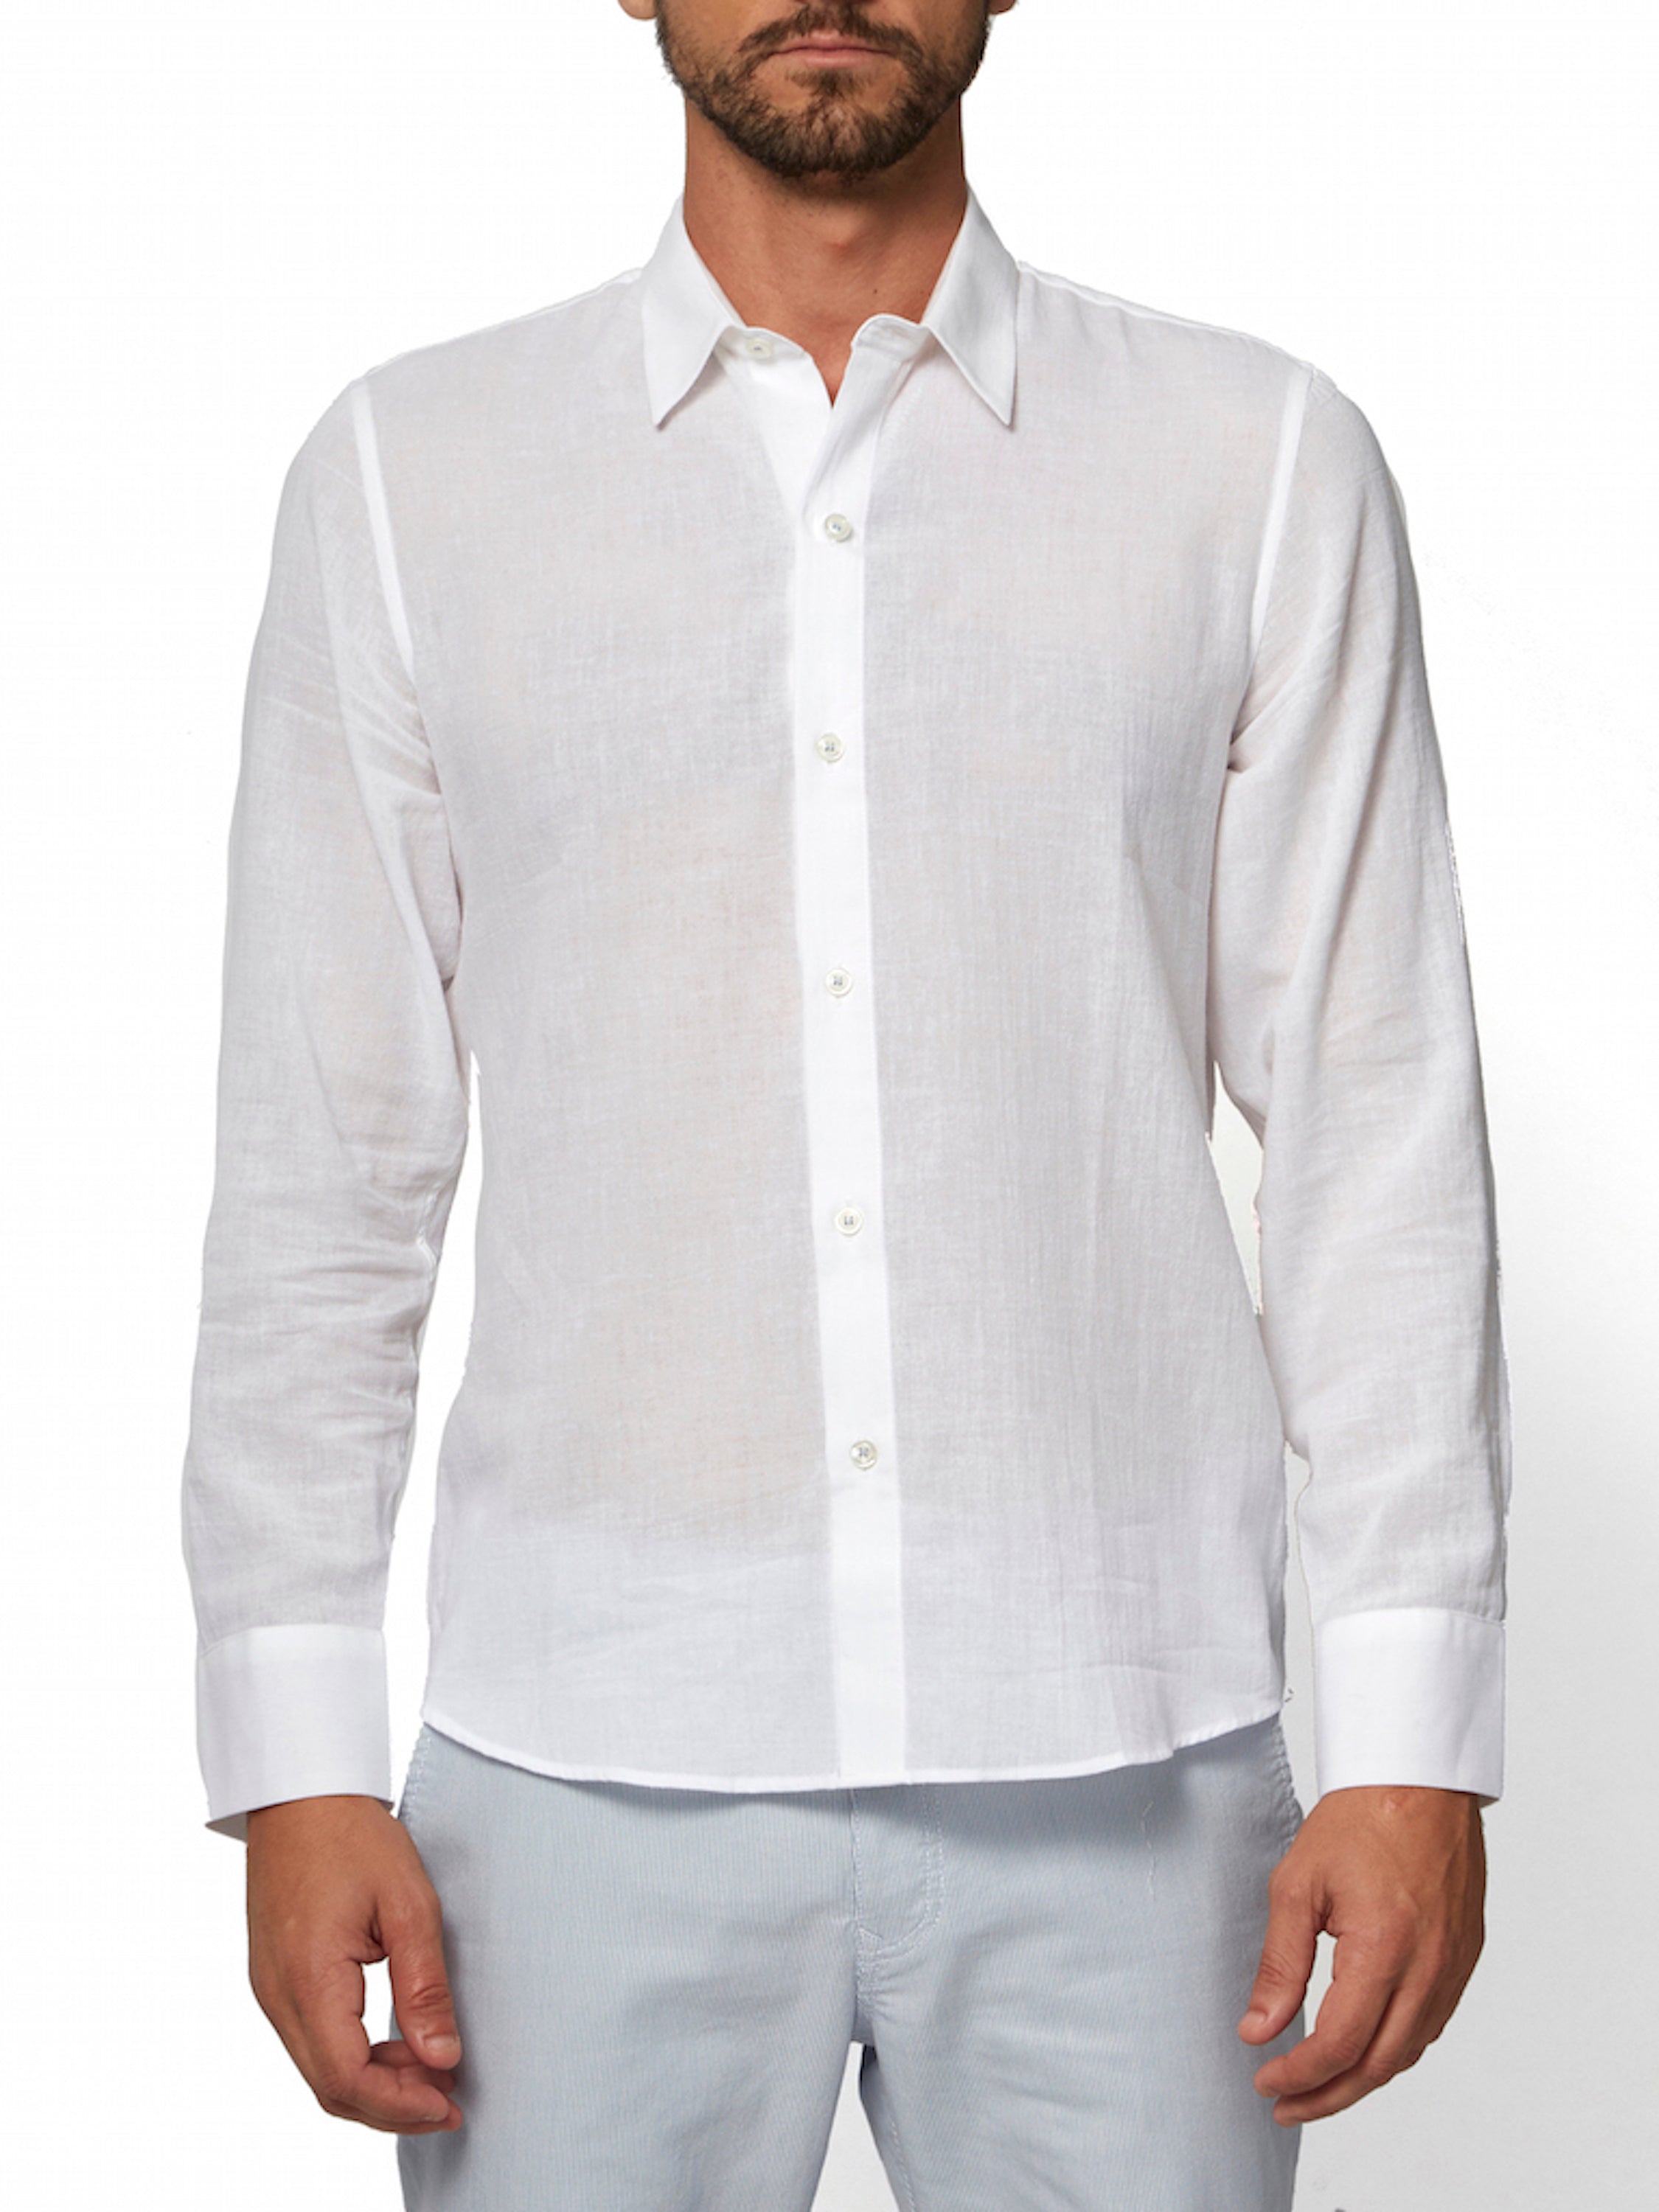 2008 White Cotton Gauze L/SL Shirt – Venissac